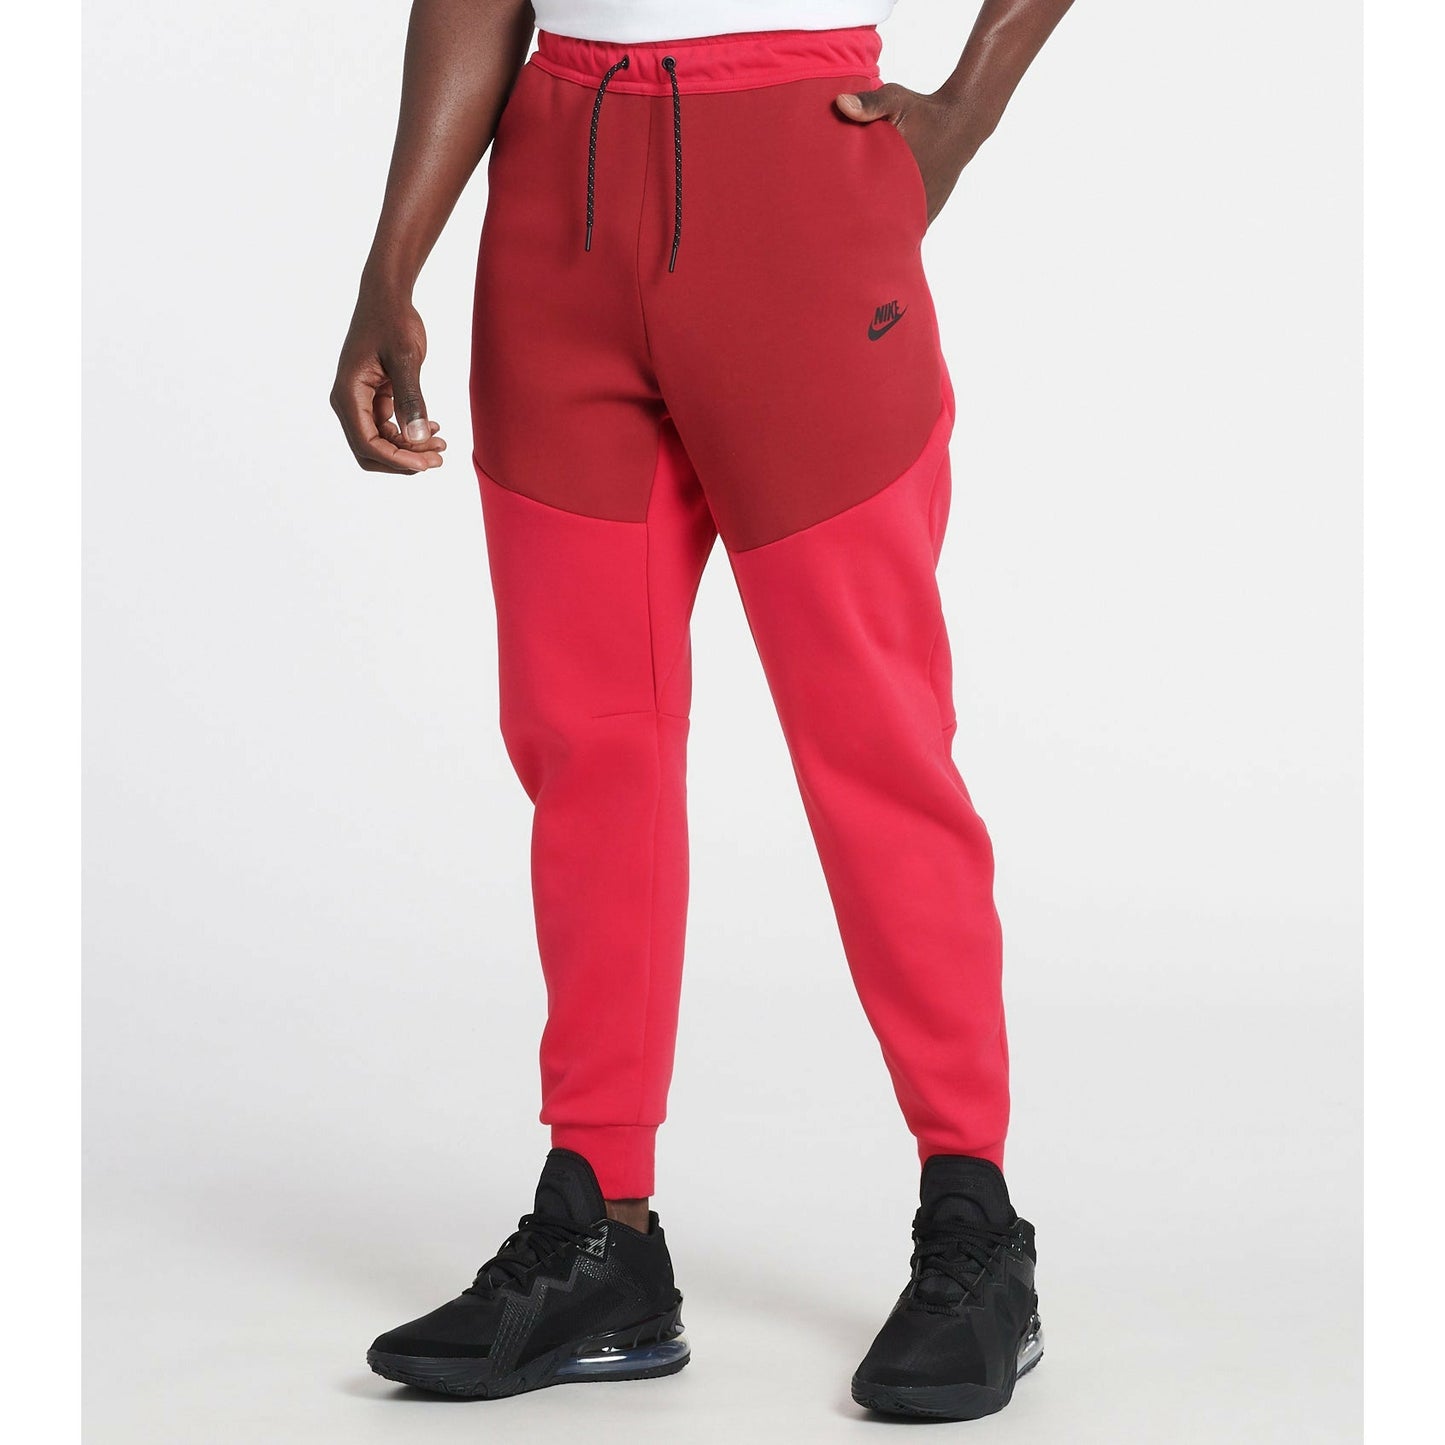 Tech Fleece Jogger Pants - Very Berry/Pomegranate/Black CU4495-643